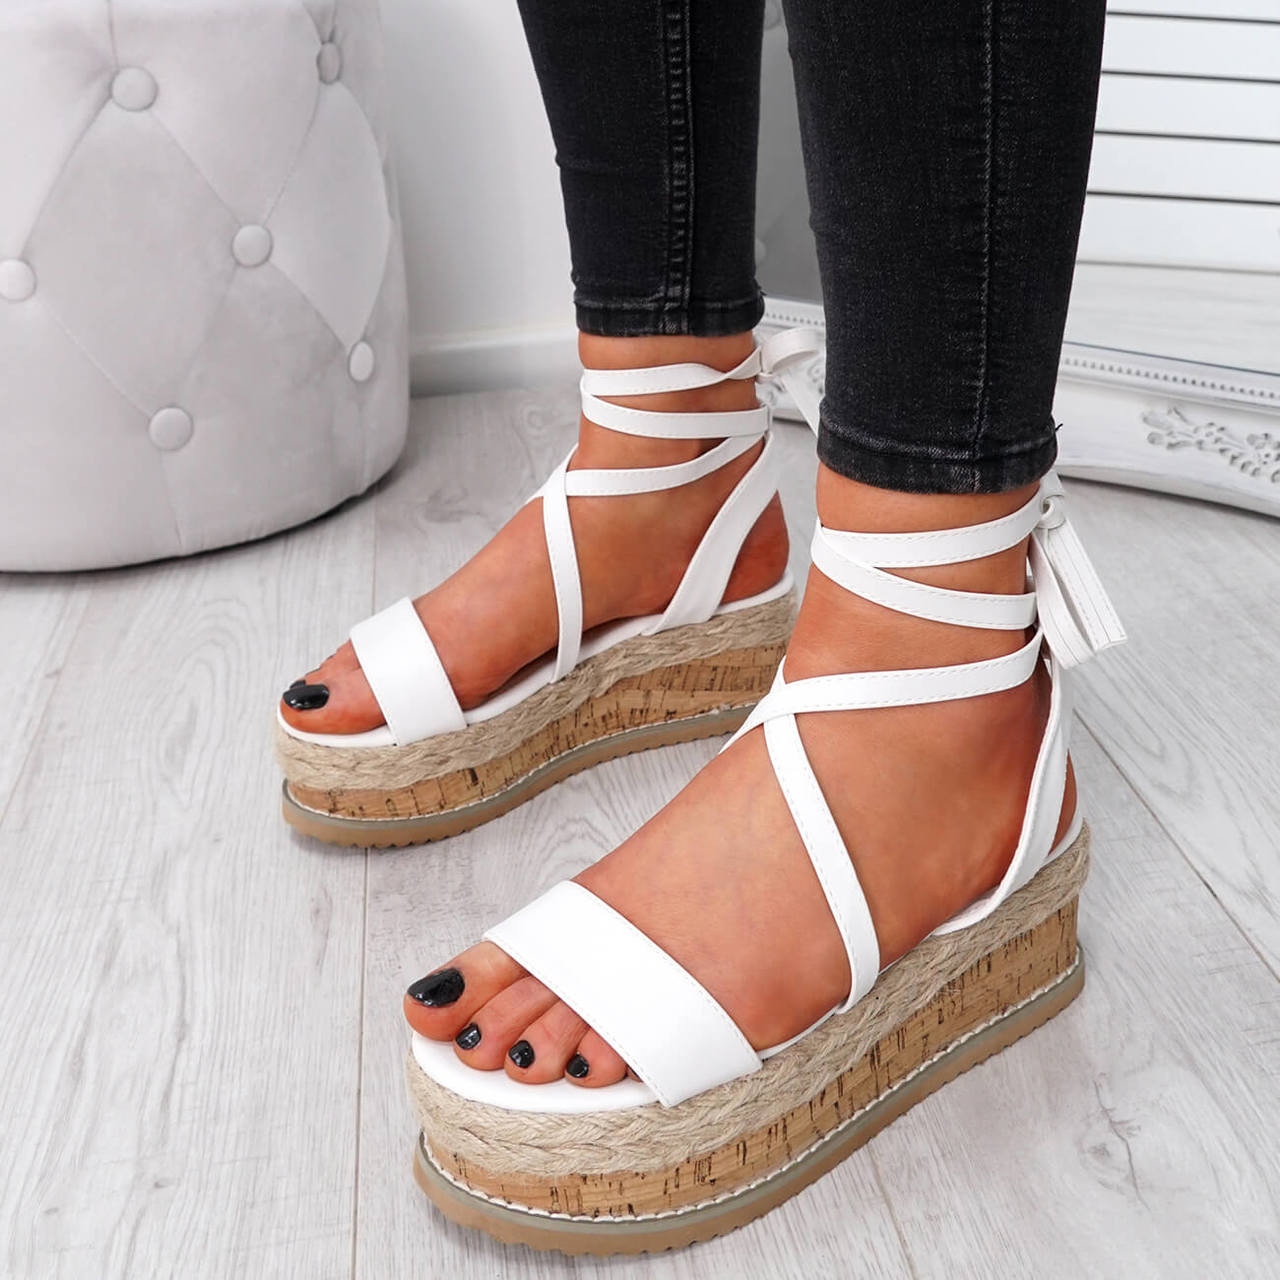 flatform sandals size 5